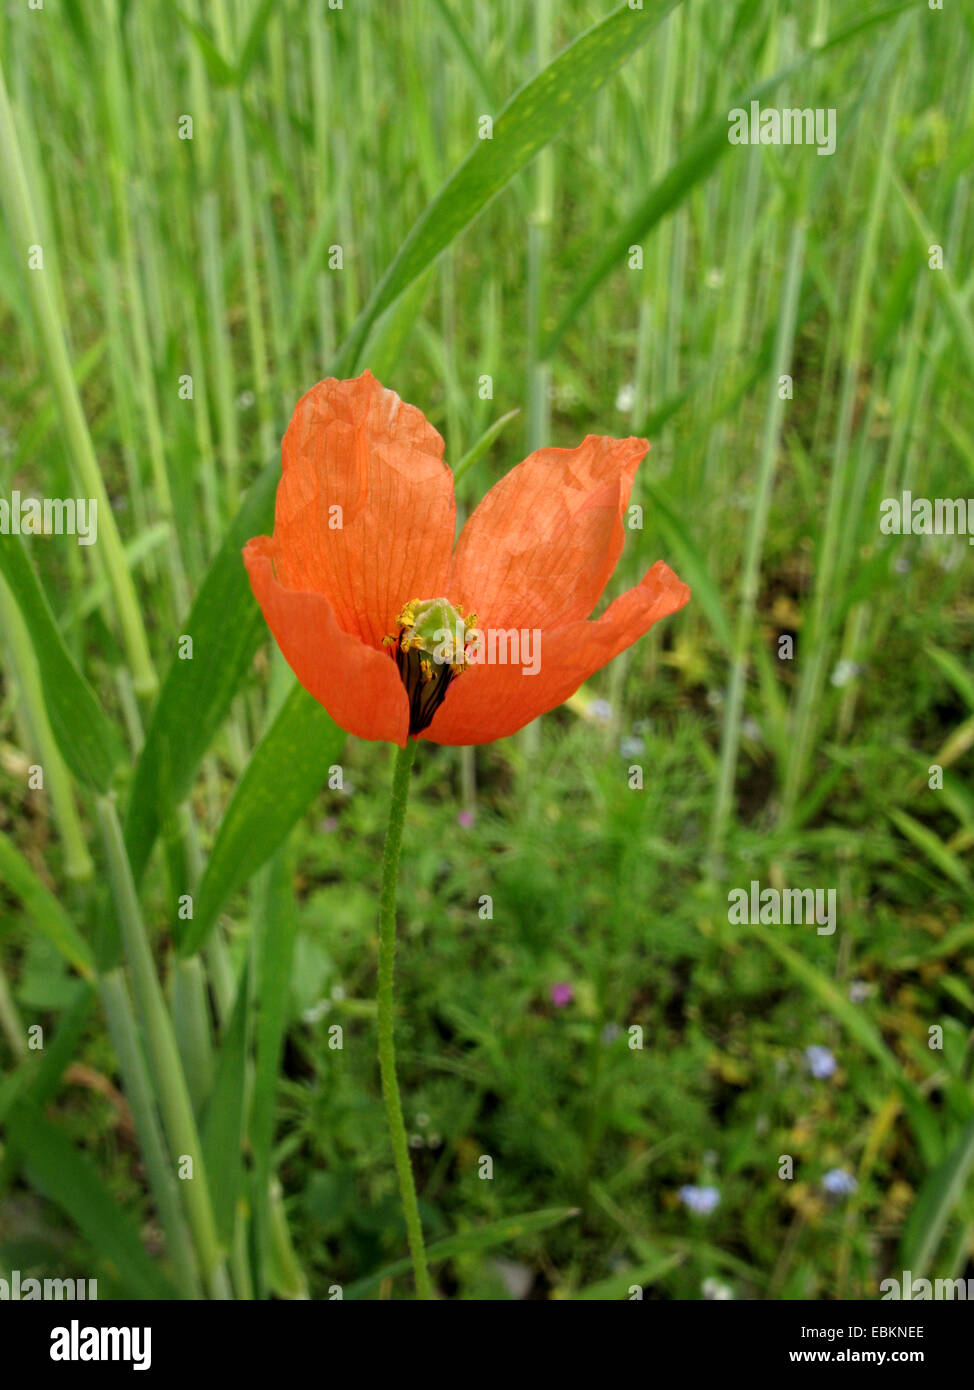 Yellow-juiced Poppy, Long-headed poppy, Field poppy (Papaver lecoqii, Papaver dubium ssp. lecoqii), blooming in a cornfield, Germany, North Rhine-Westphalia Stock Photo